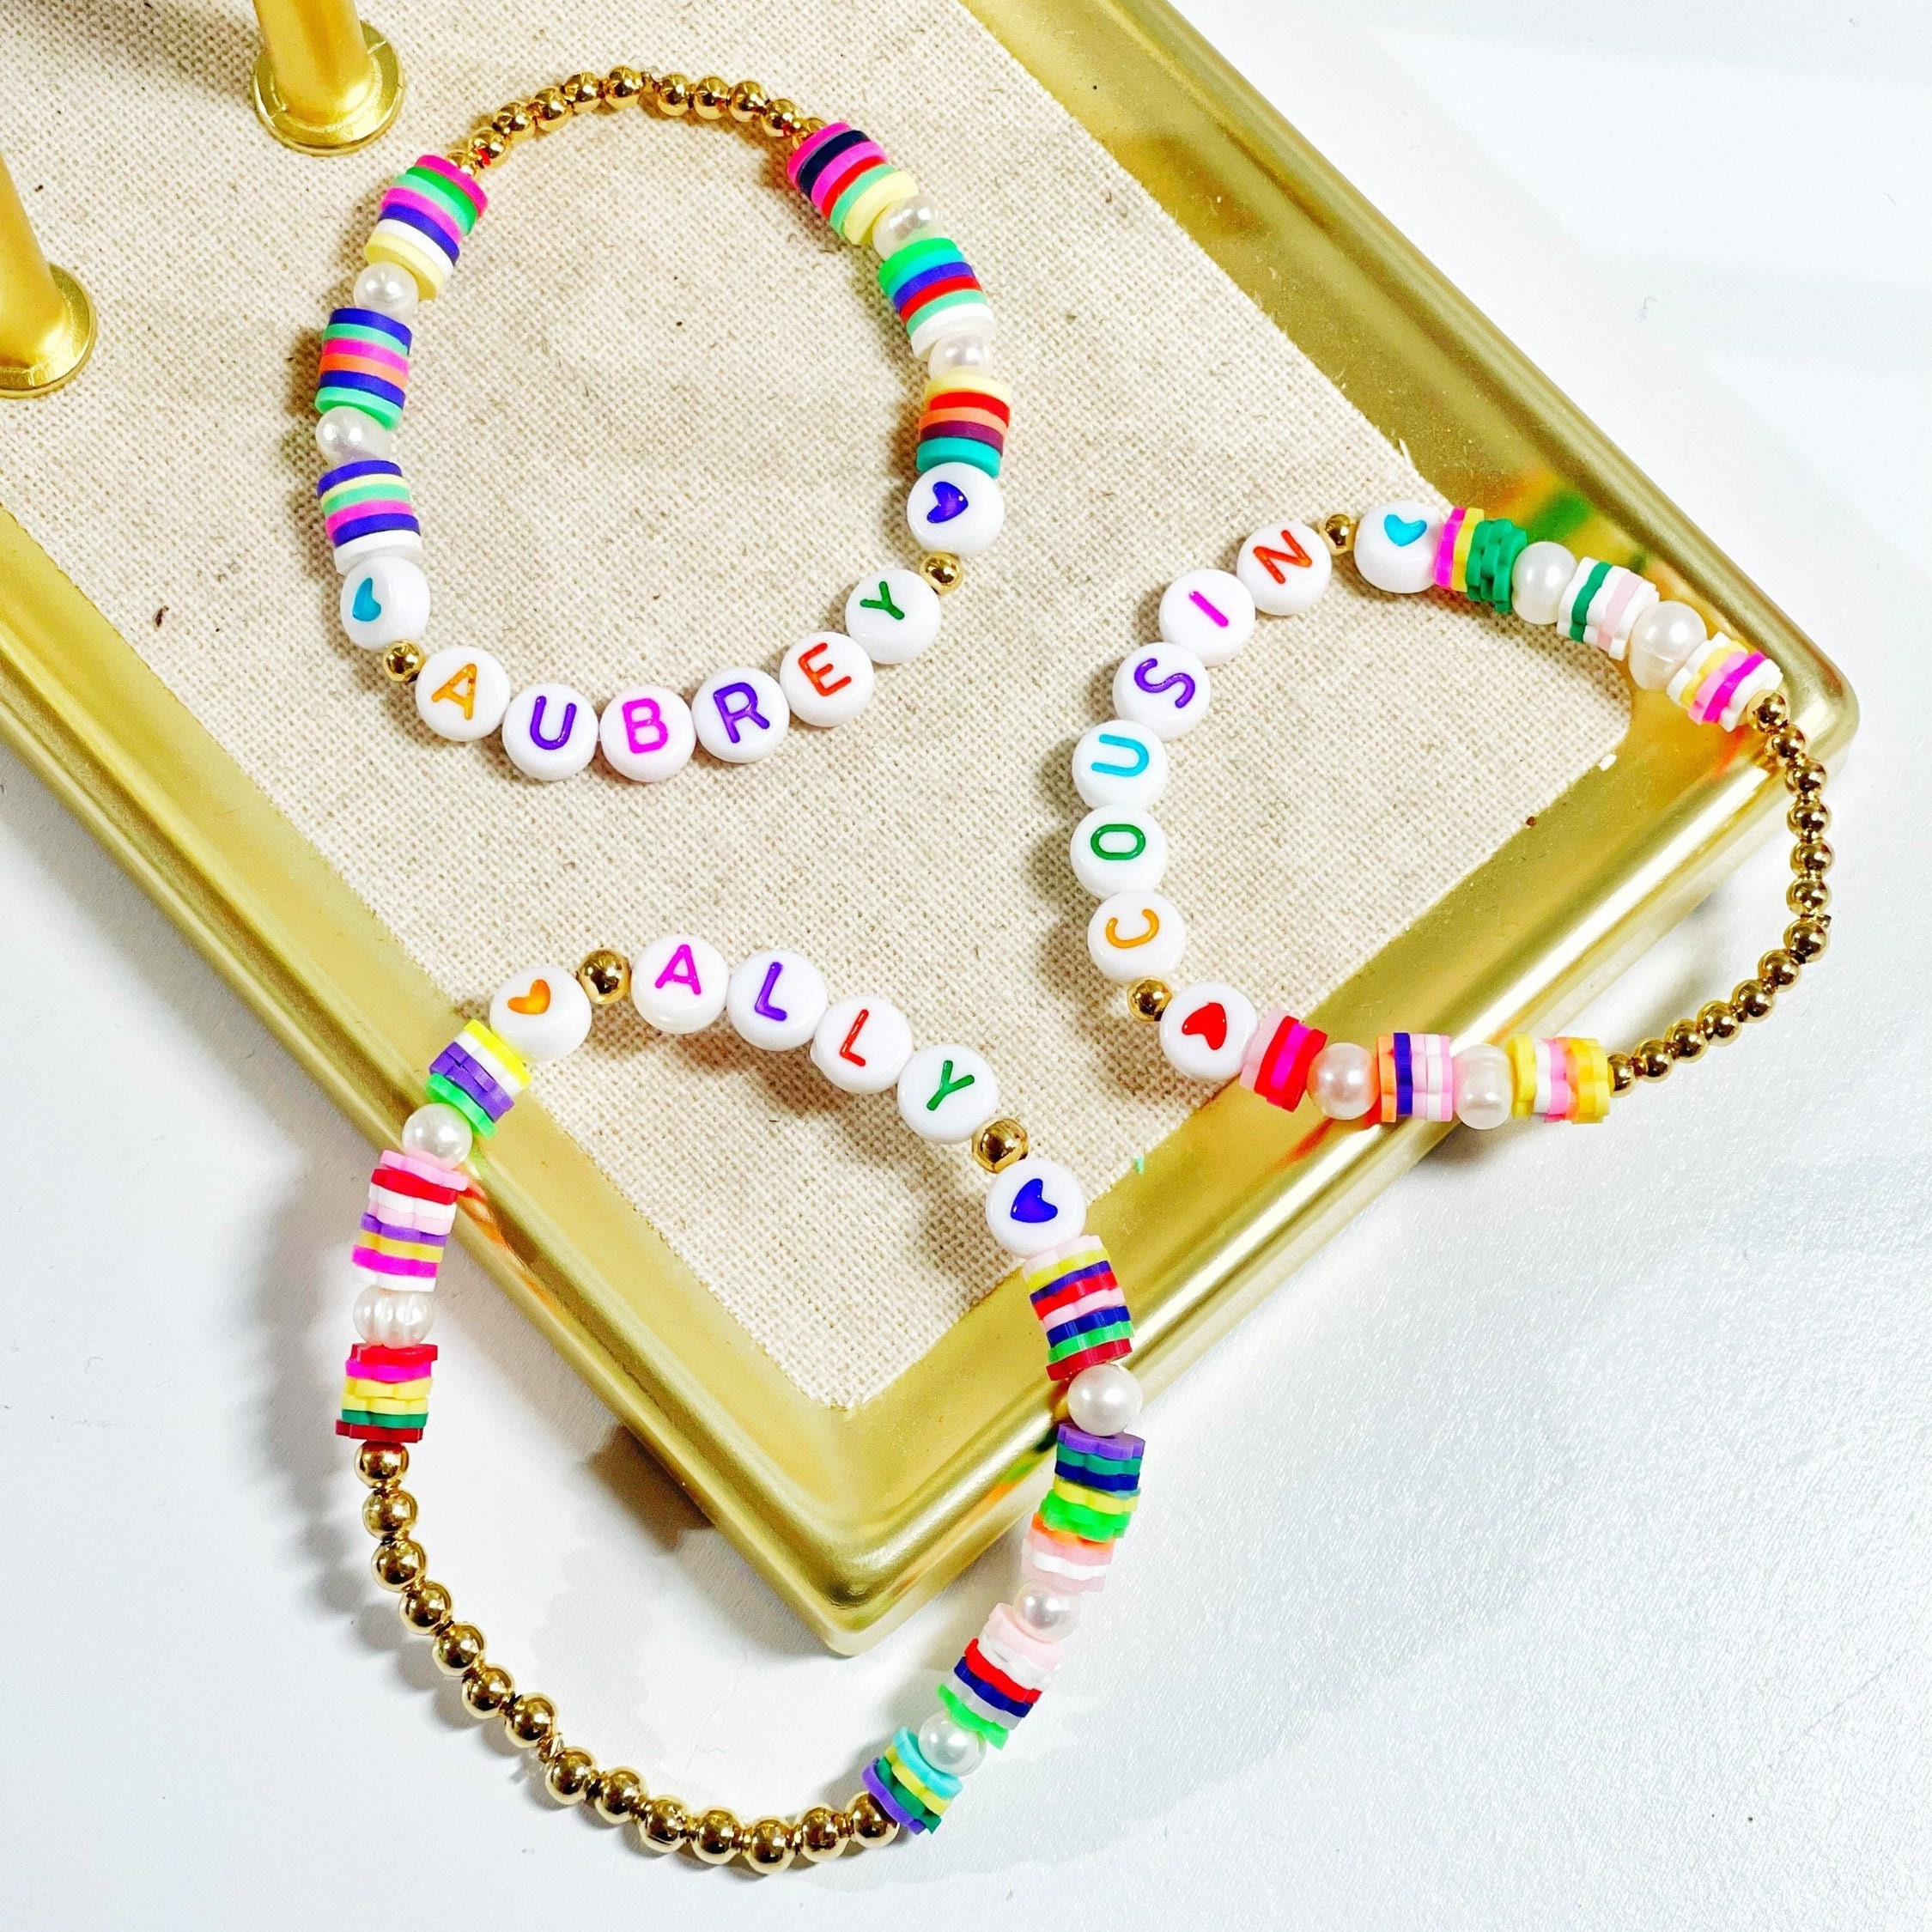 Hot Selling Brand L $V Fashion Casual Letter Bracelet Necklace